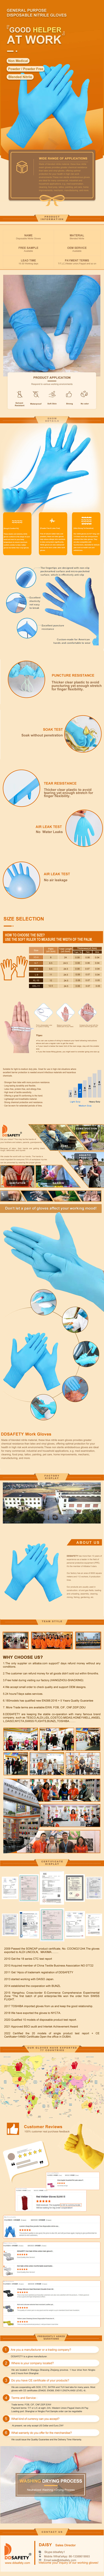 Disposable Nitrile Gloves - DPV712 Disposable Nitrile Gloves - DPV712 gloves,nitrile gloves,disposable gloves,blue nitrile gloves